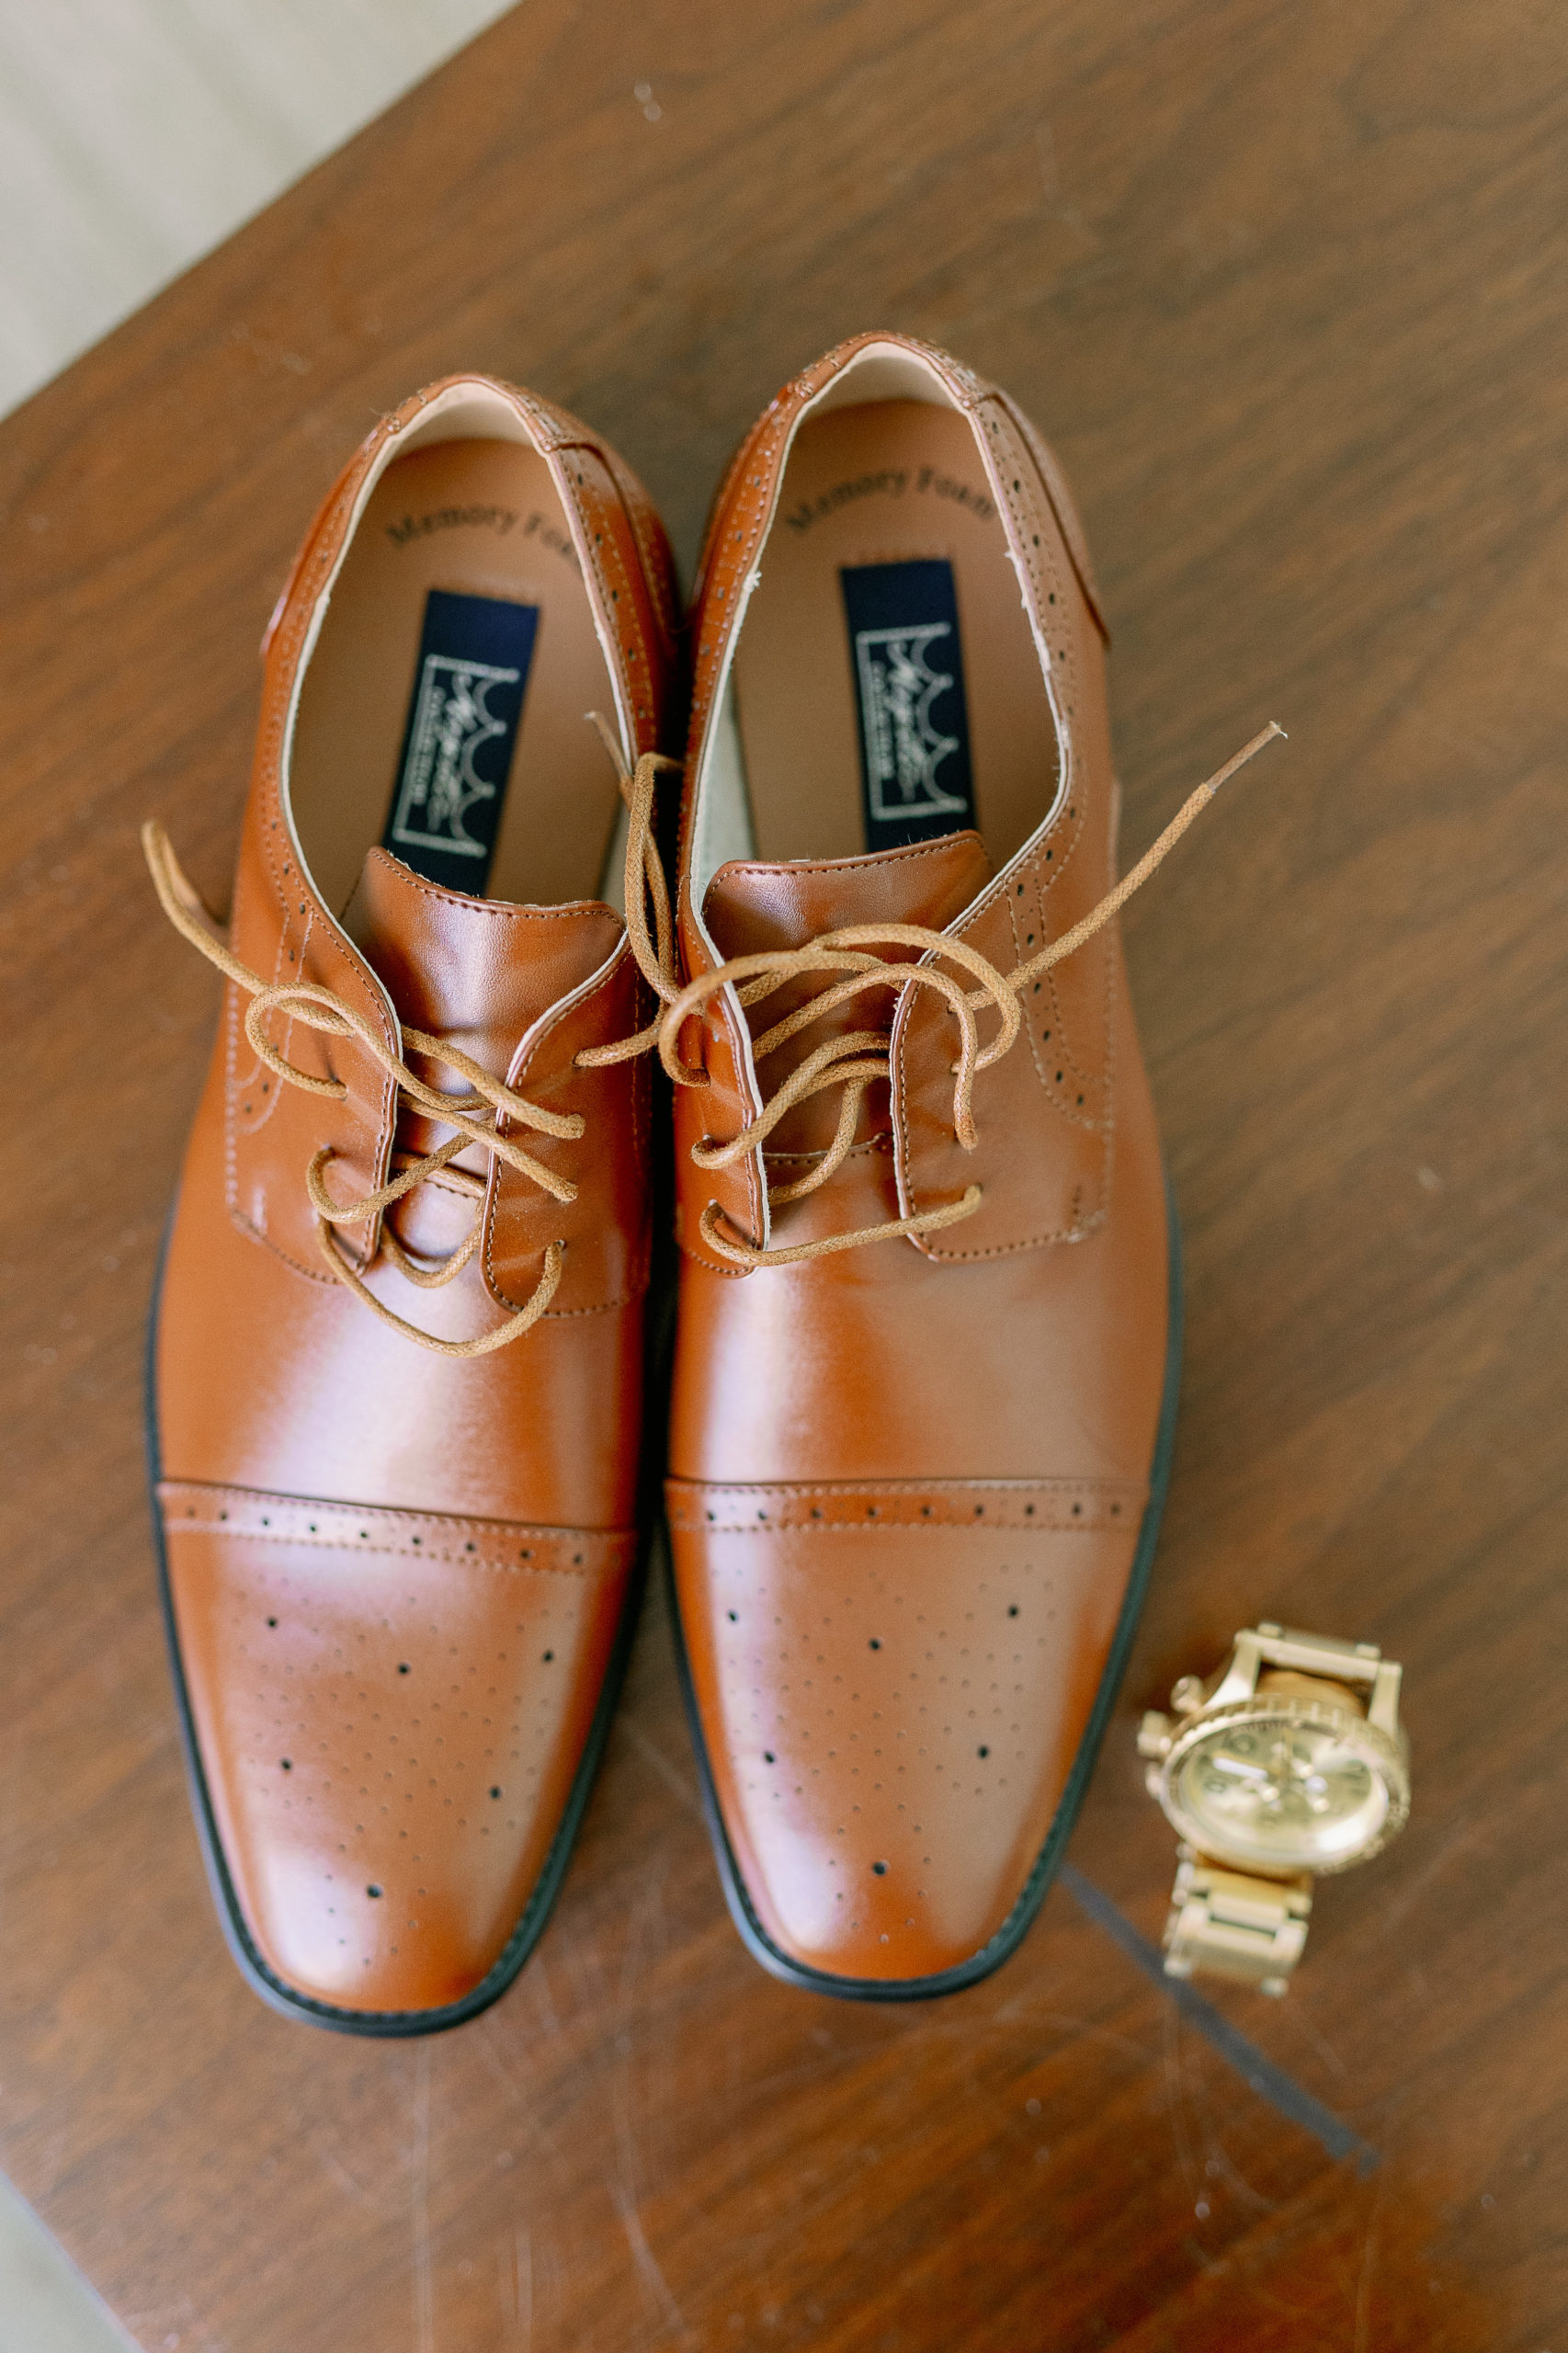 Grooms wedding shoes